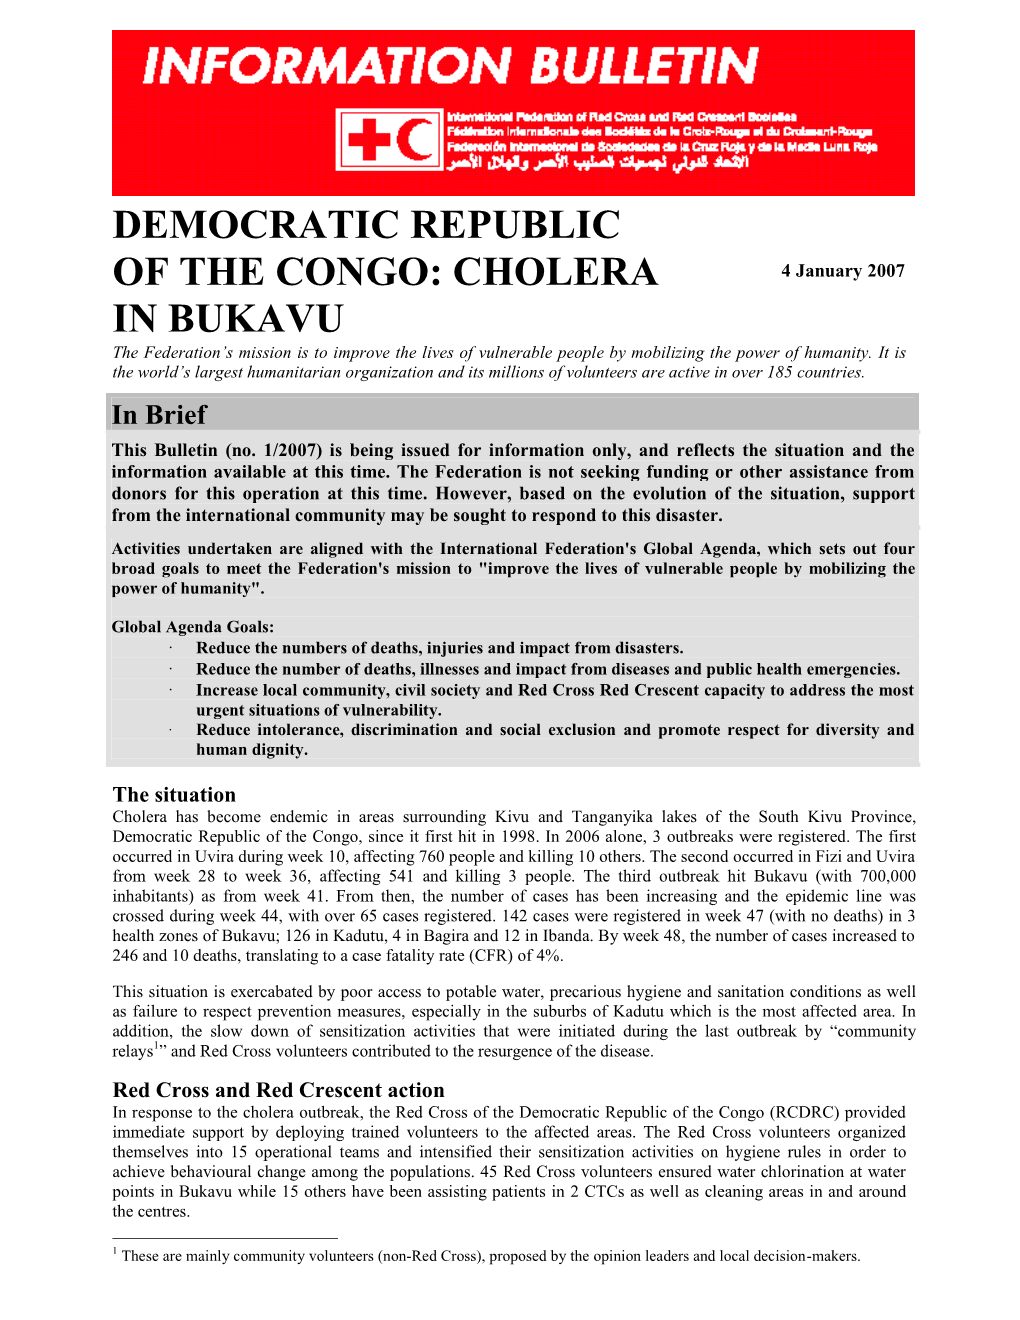 Democratic Republic of the Congo: Cholera in Bukavu; Information Bulletin No